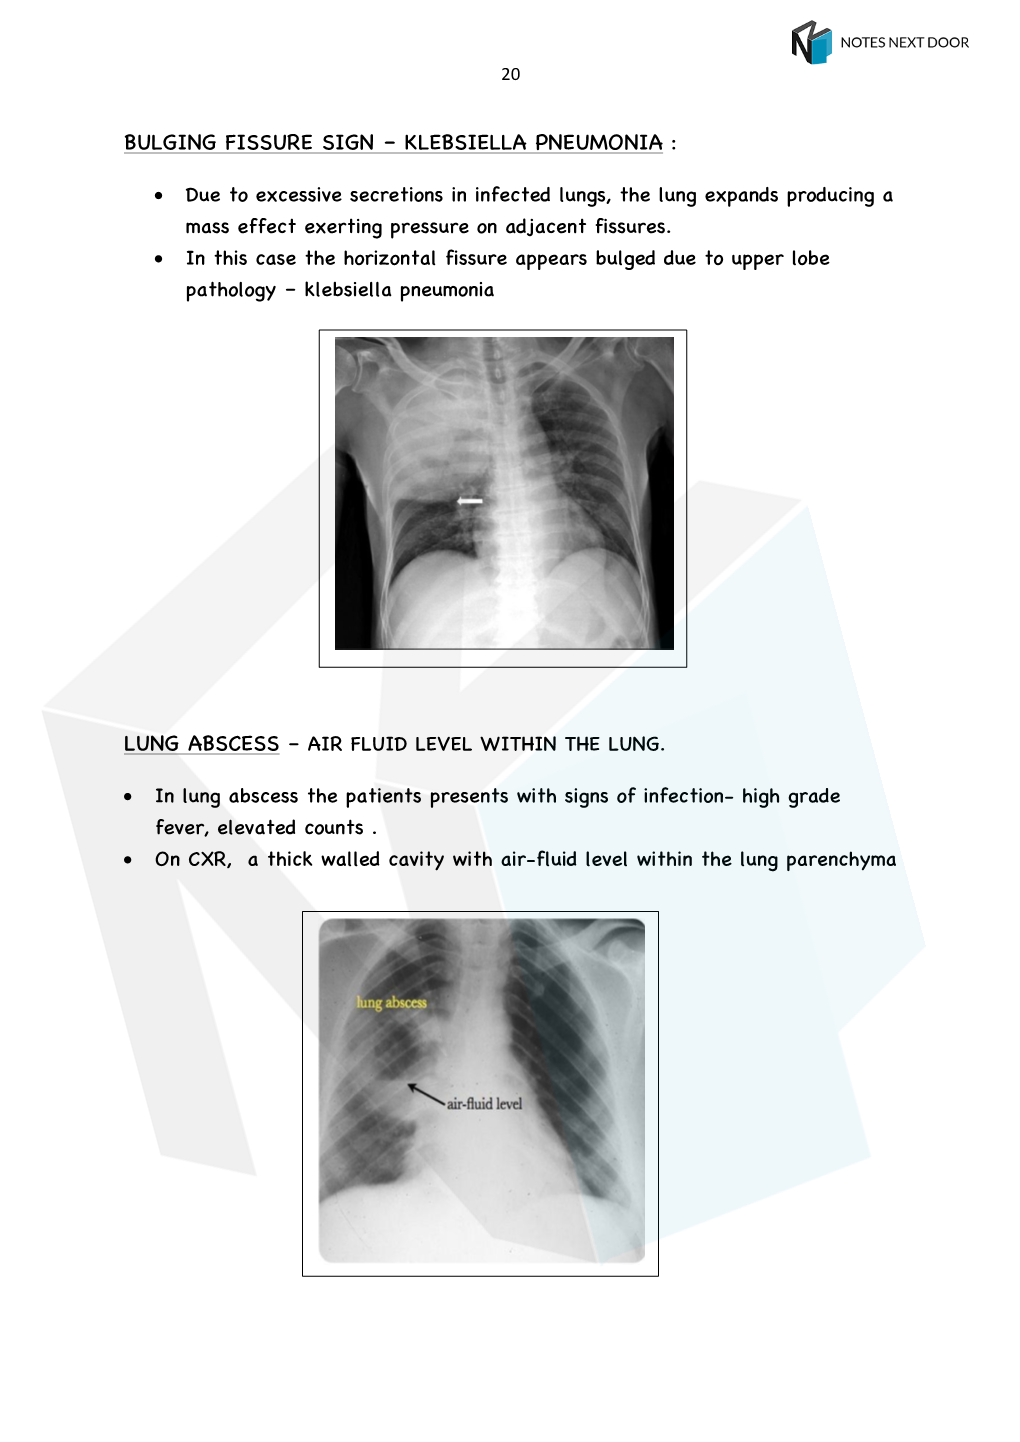 Bulging Fissure Sign – Klebsiella Pneumonia